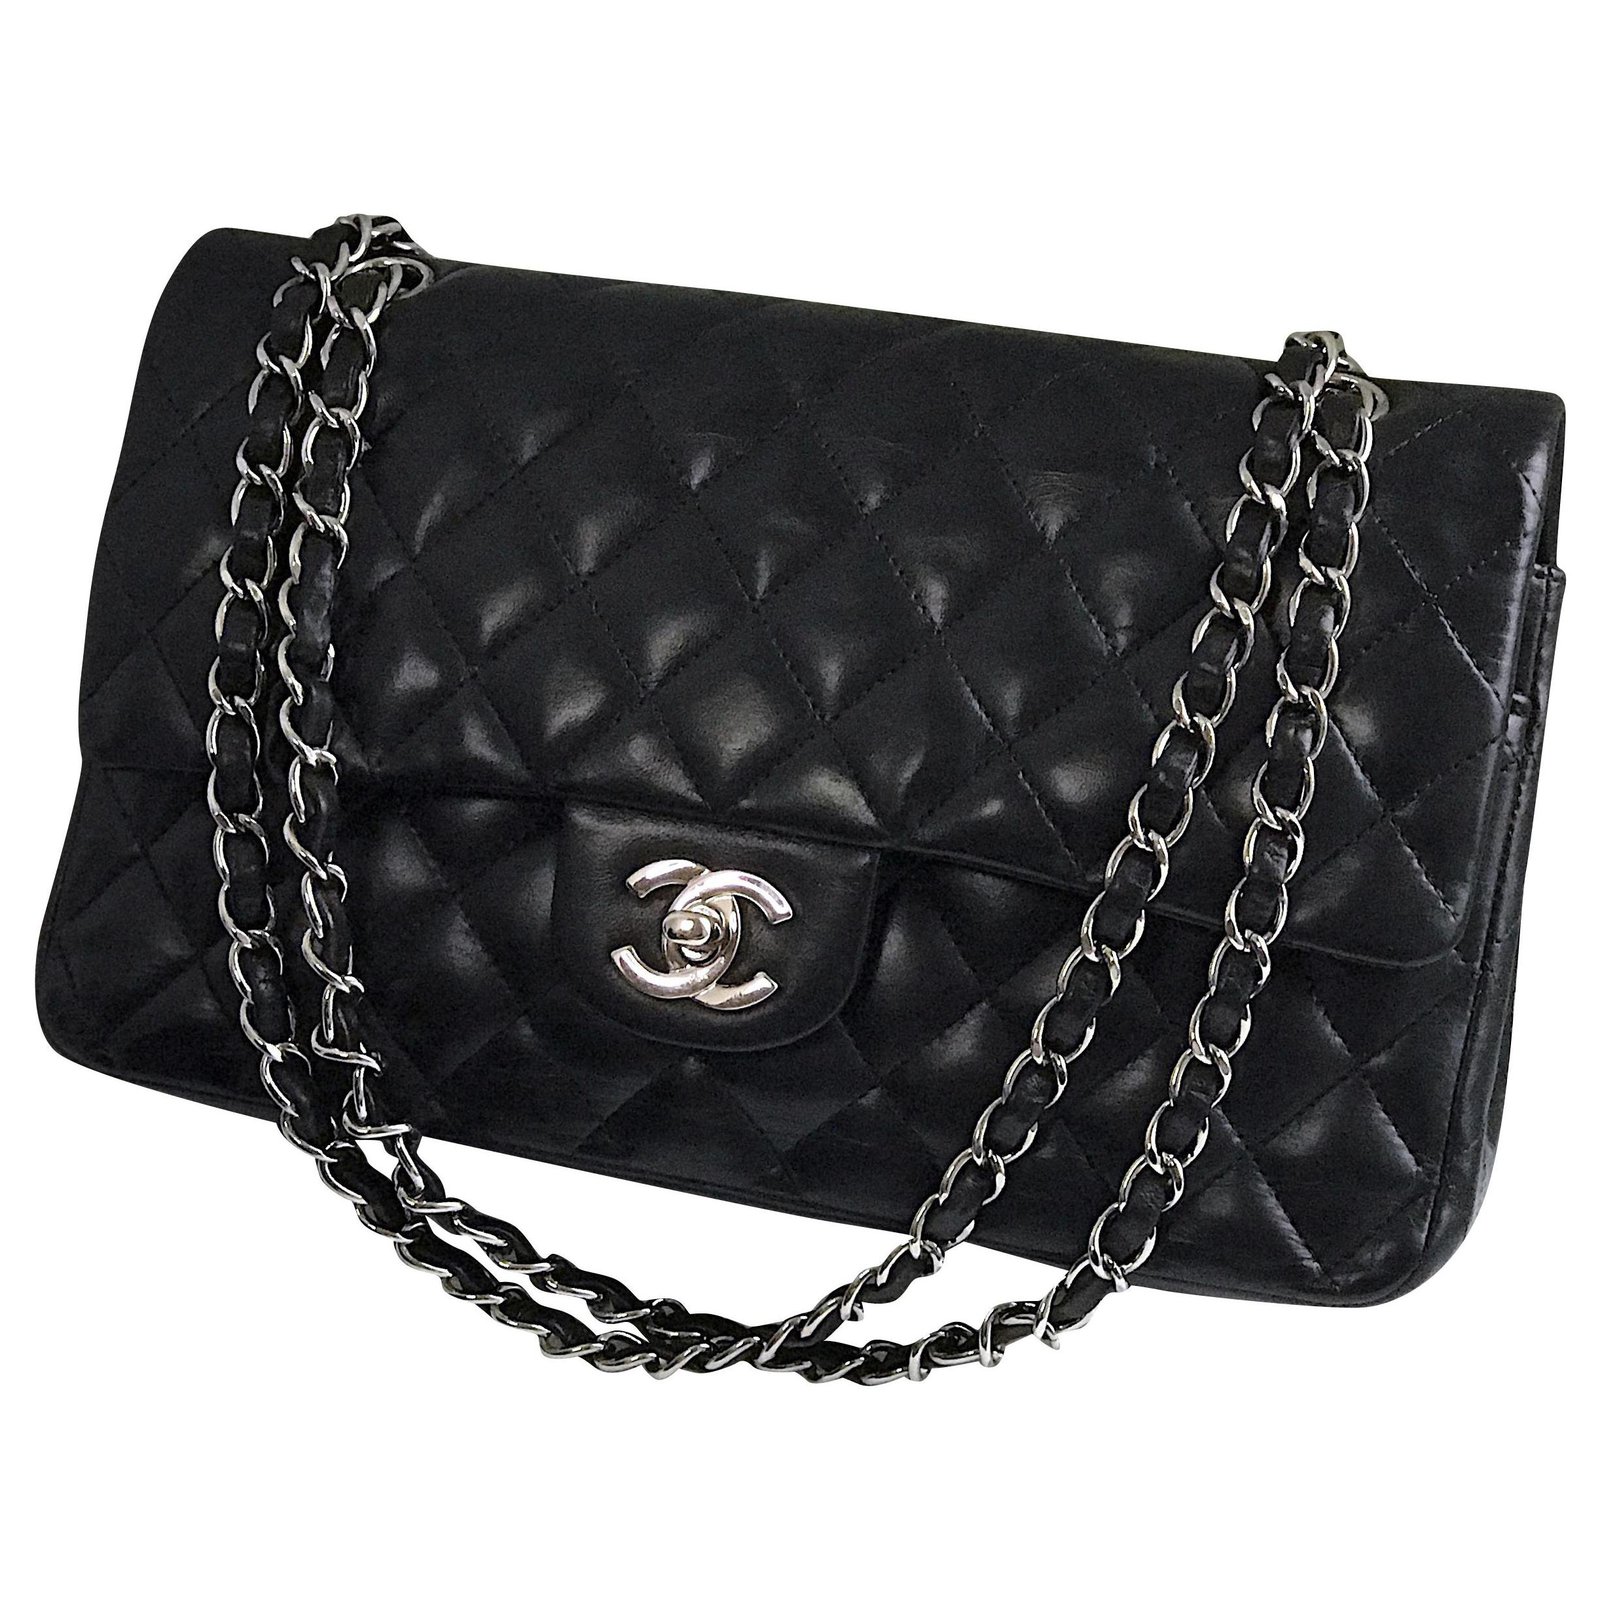 Chanel Timeless Classic Mini Flap handbags: A friendly comparison